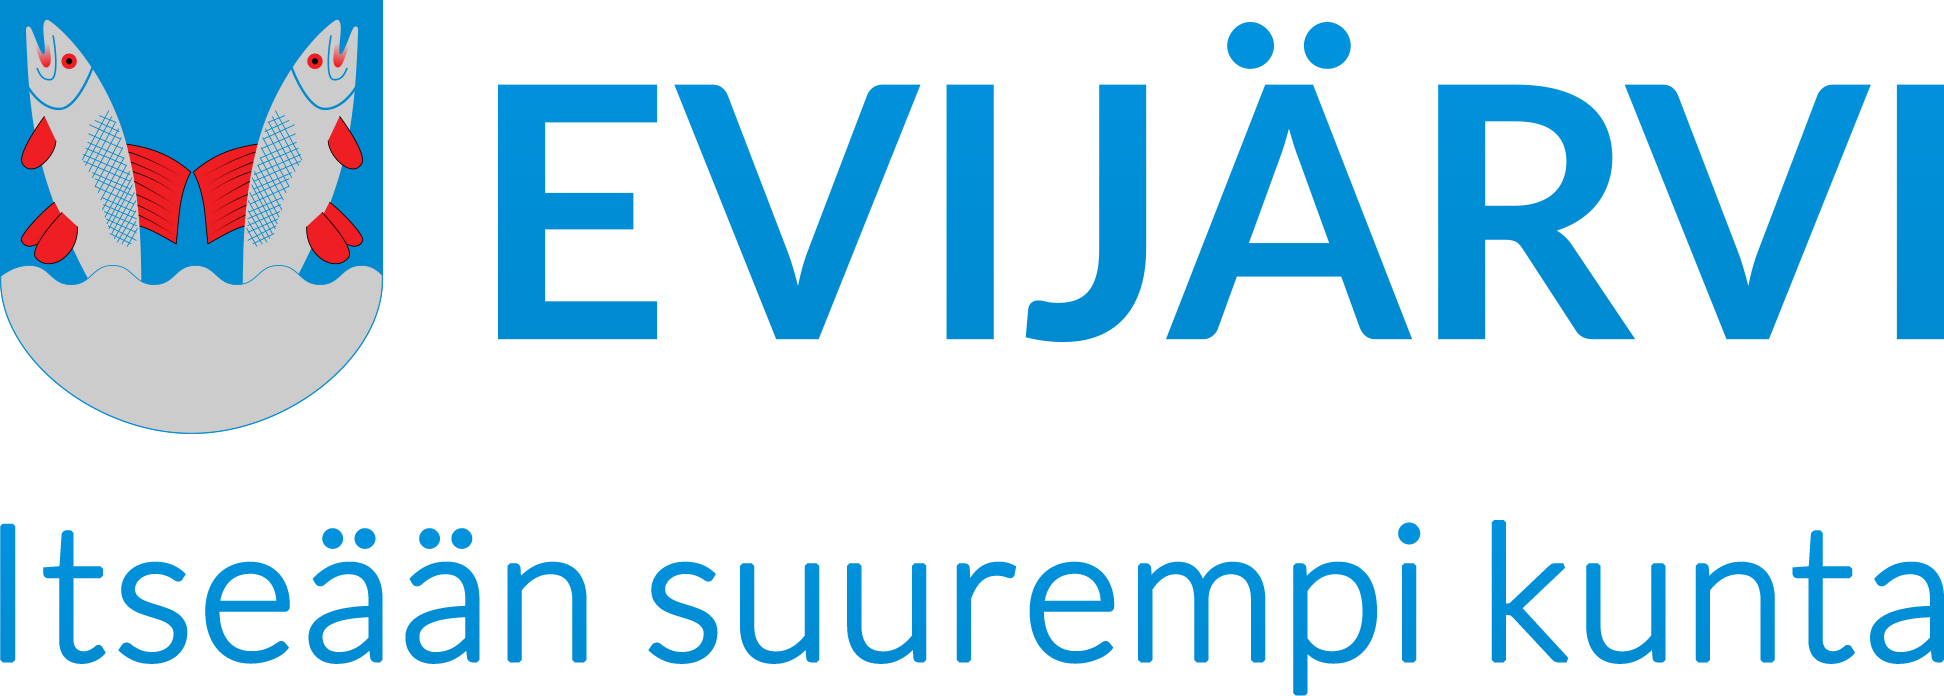 Evijarvi logo slogan taustalla